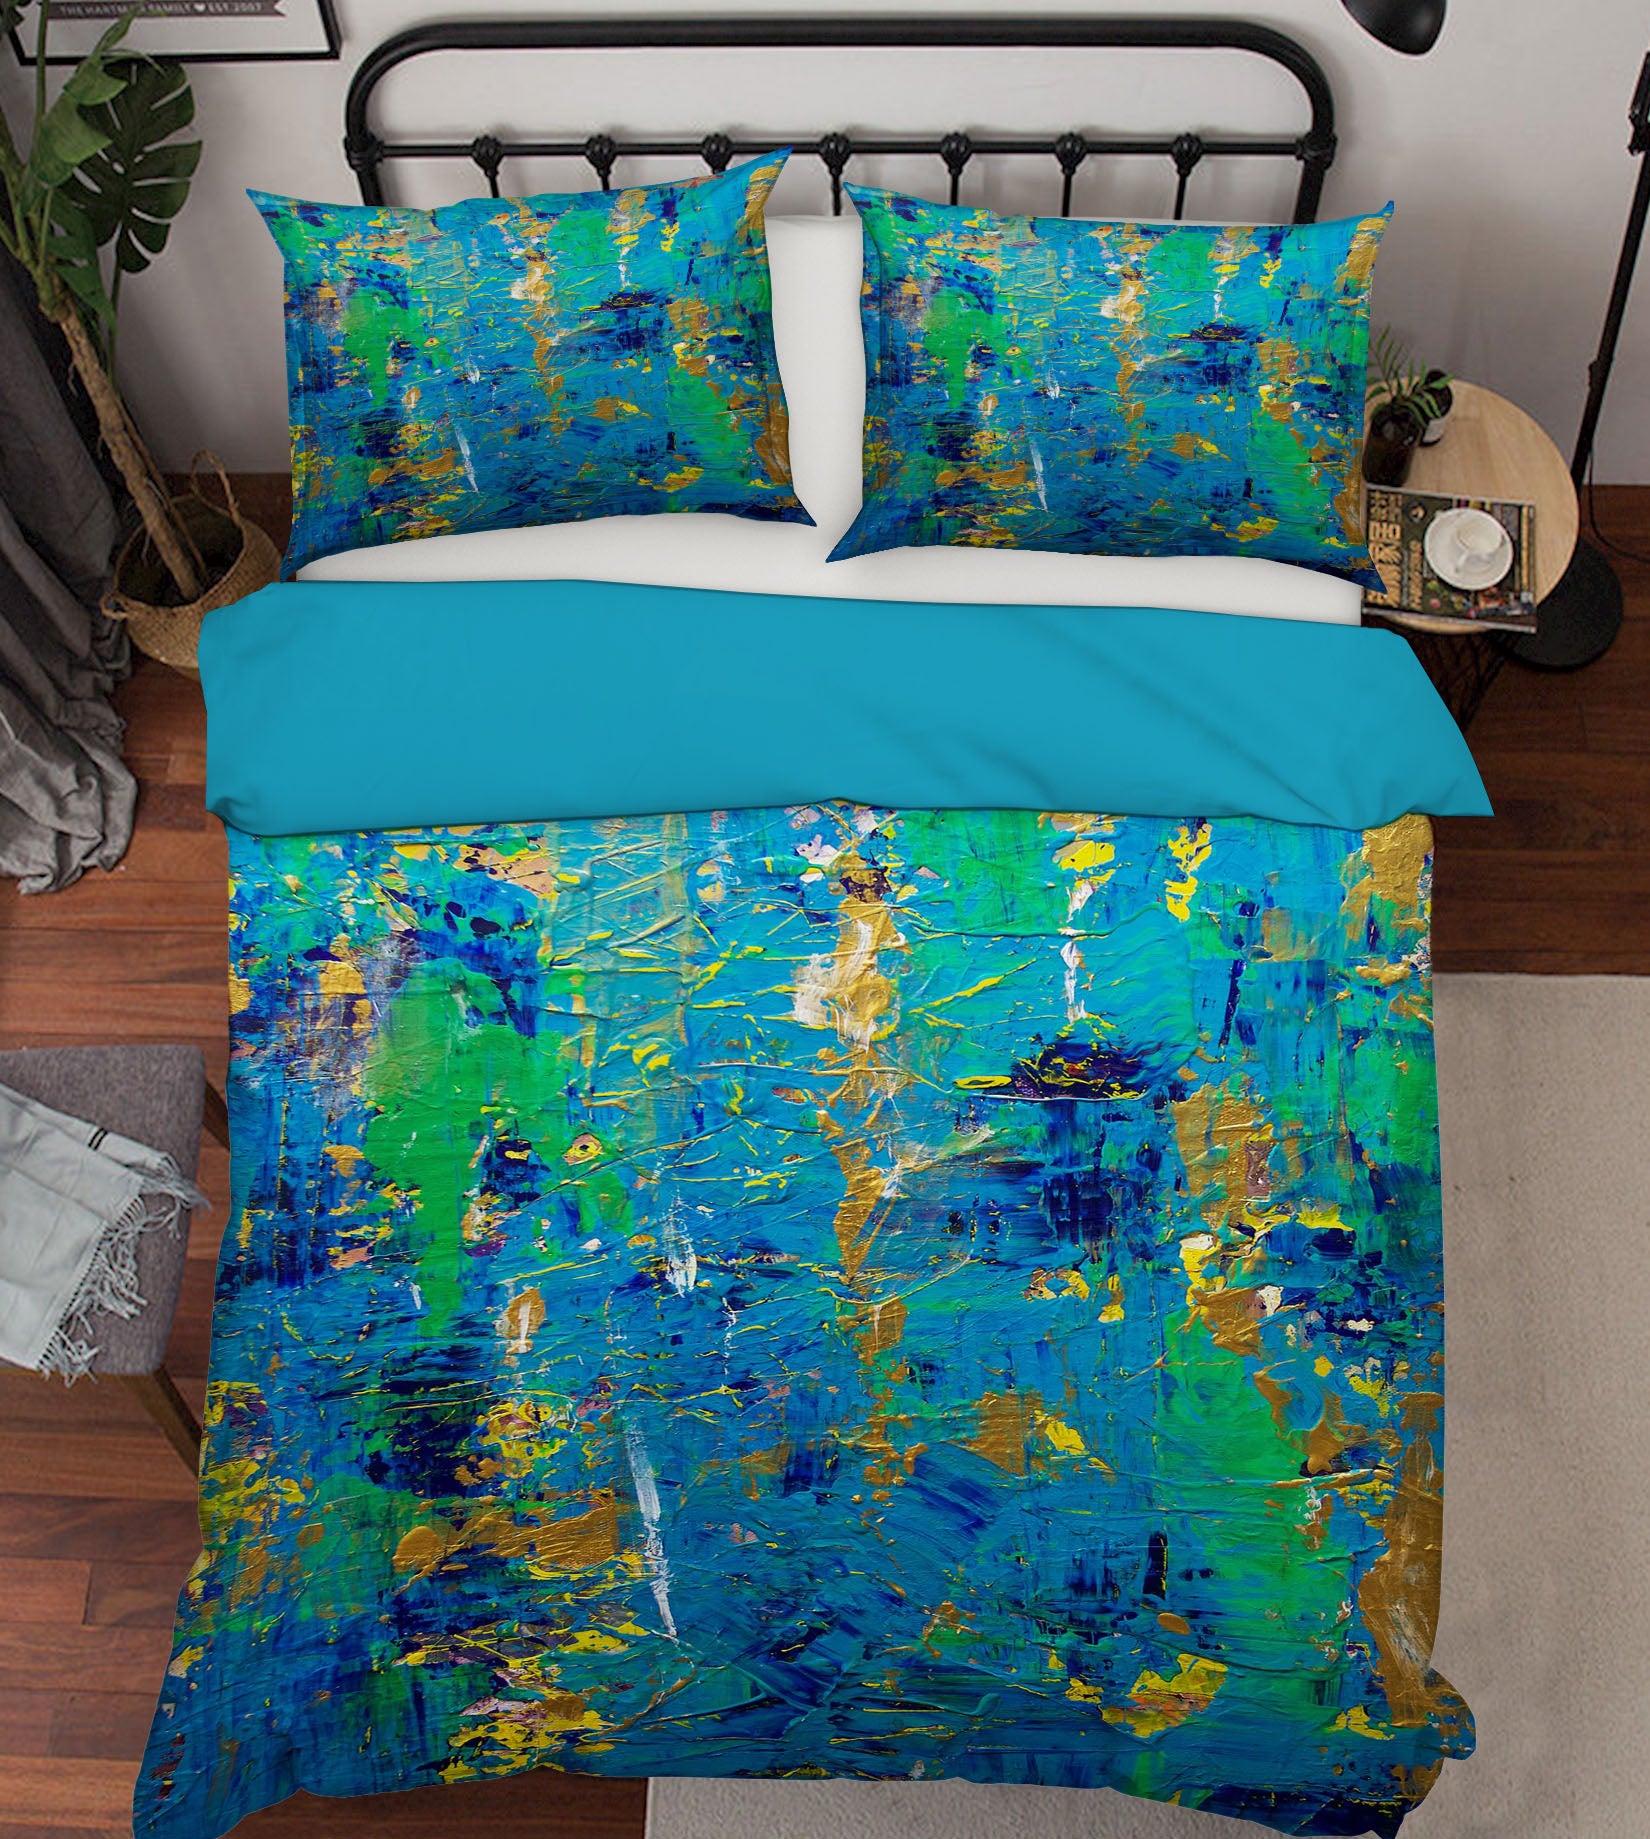 3D Blue Pigment 1126 Allan P. Friedlander Bedding Bed Pillowcases Quilt